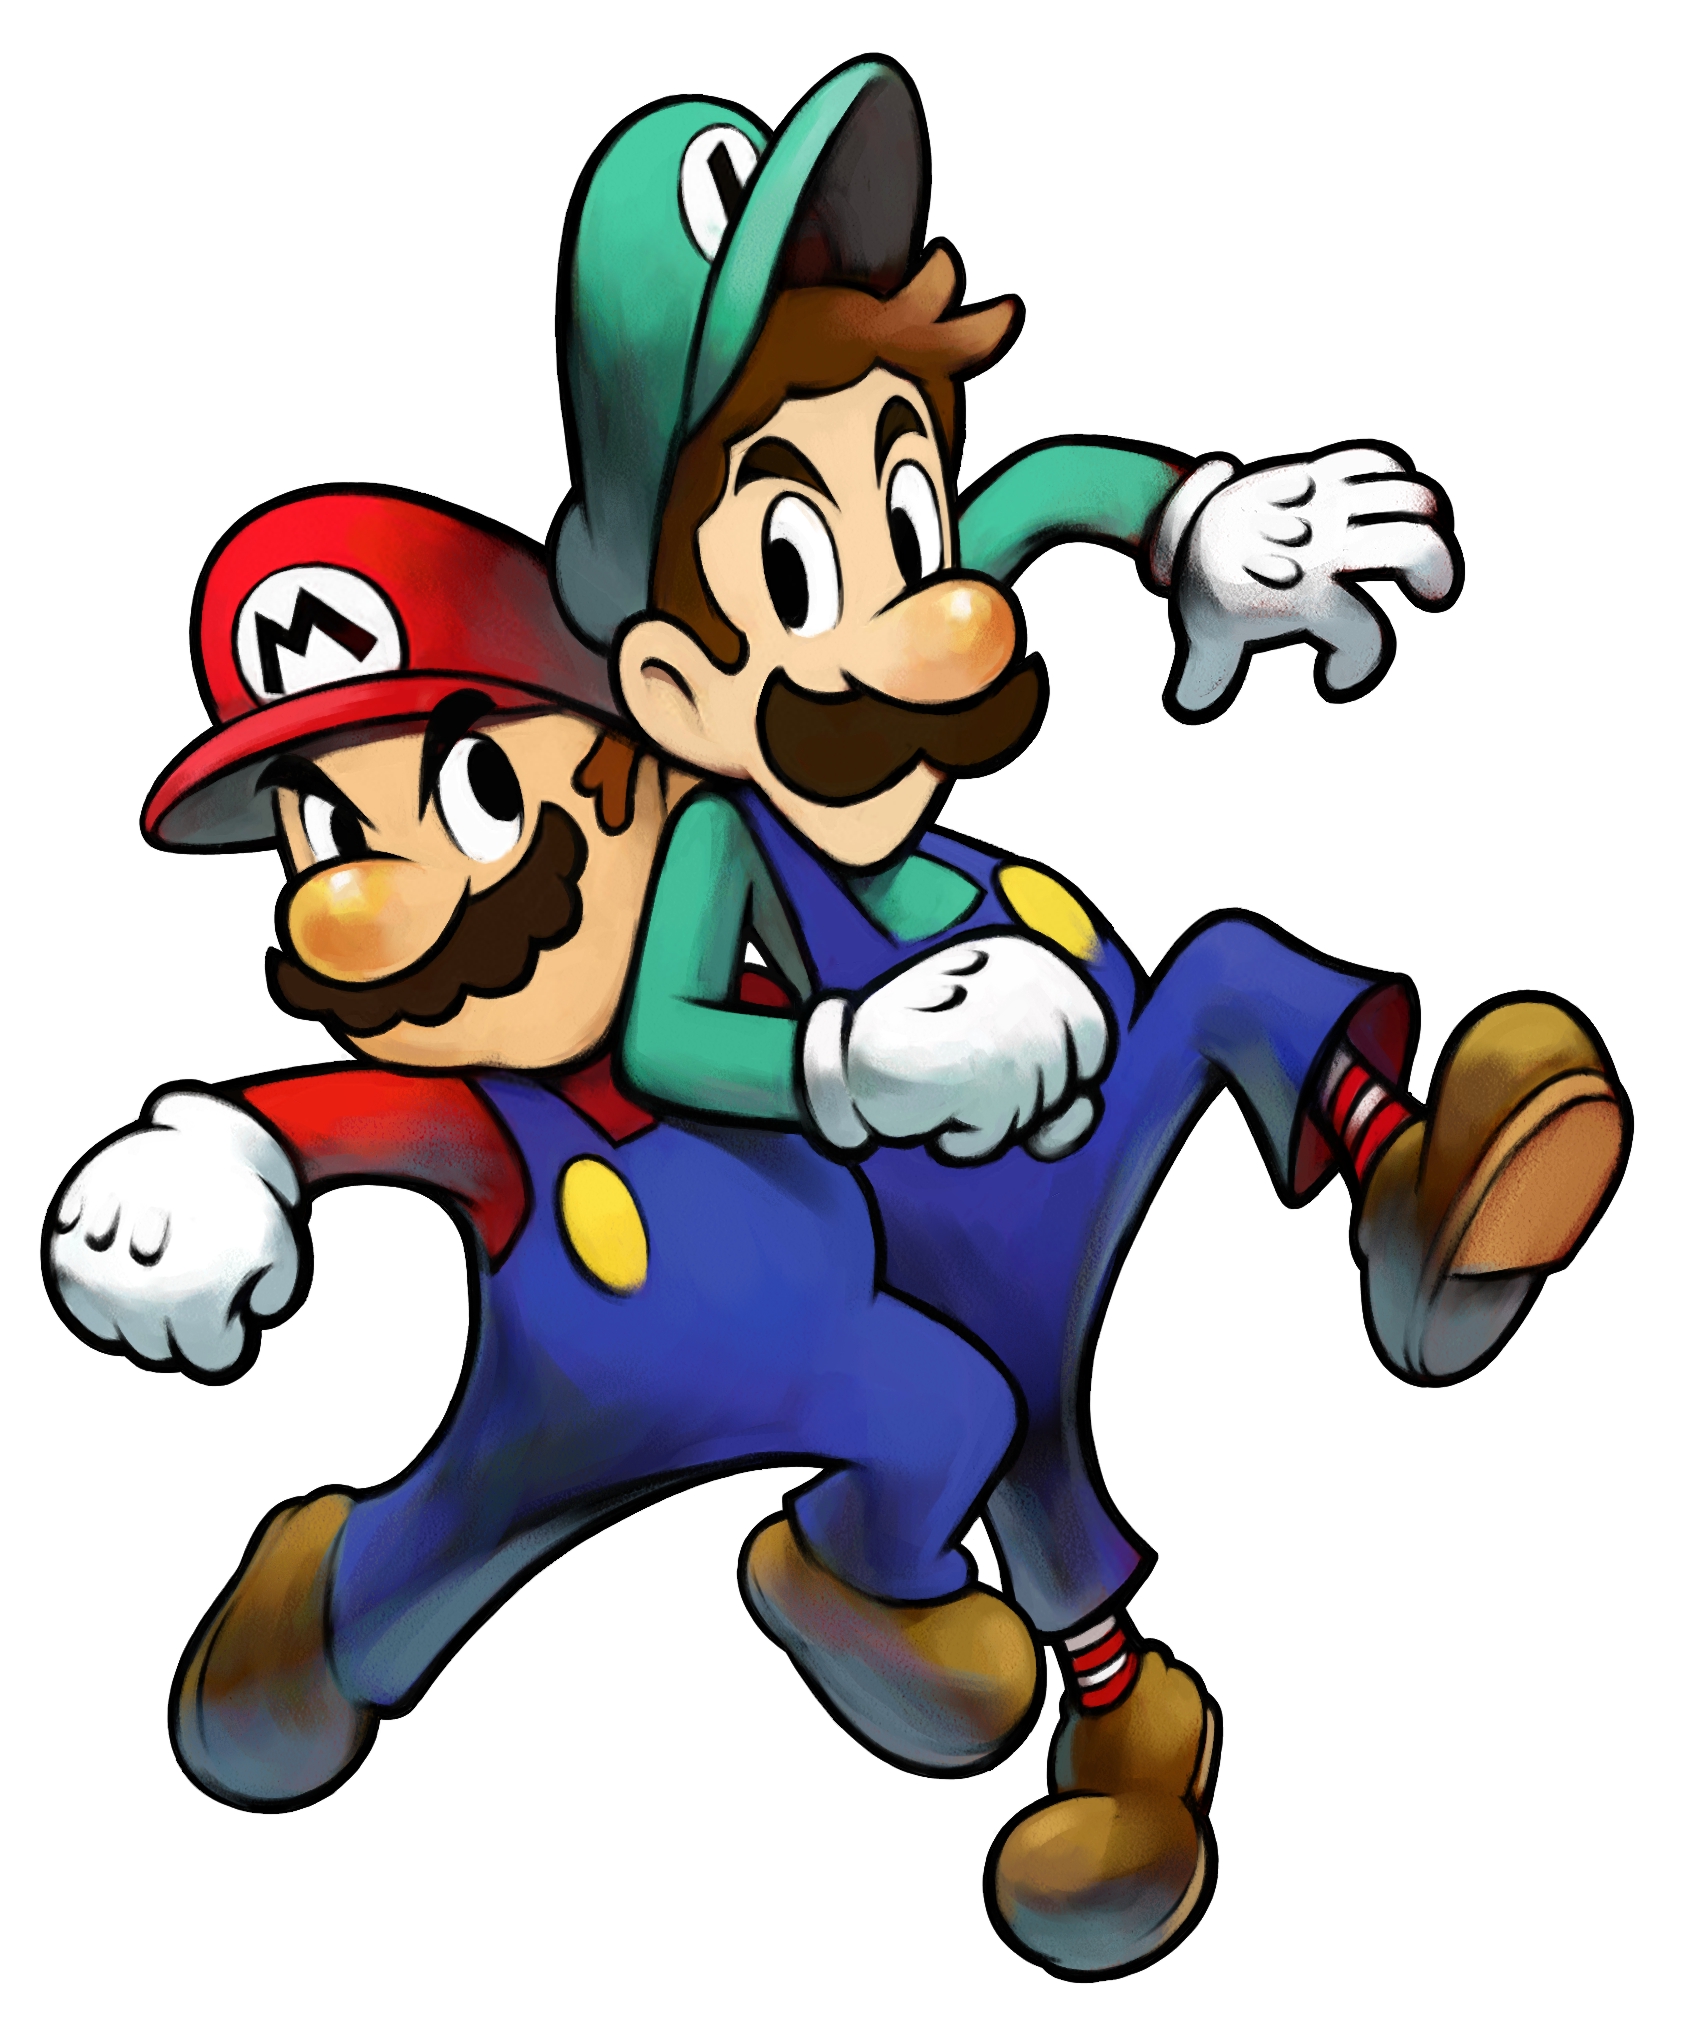 SSB Mercurious -> Do The Mario Characters